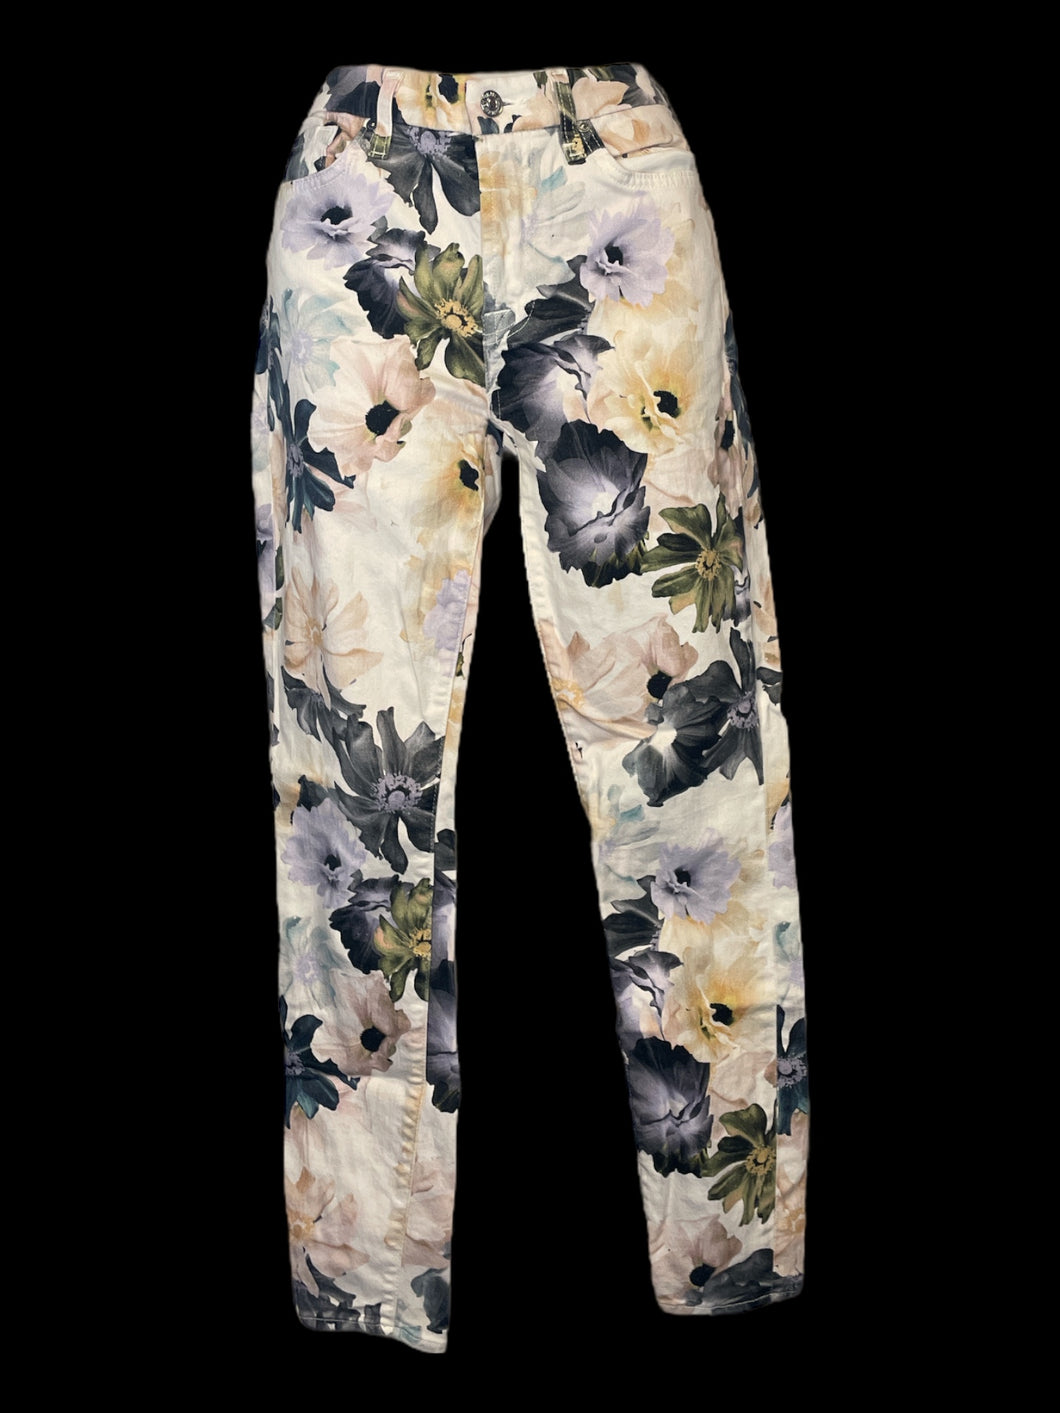 S White & multicolor floral denim taper leg high waist pants w/ pockets, belt loops, & button/zipper closure